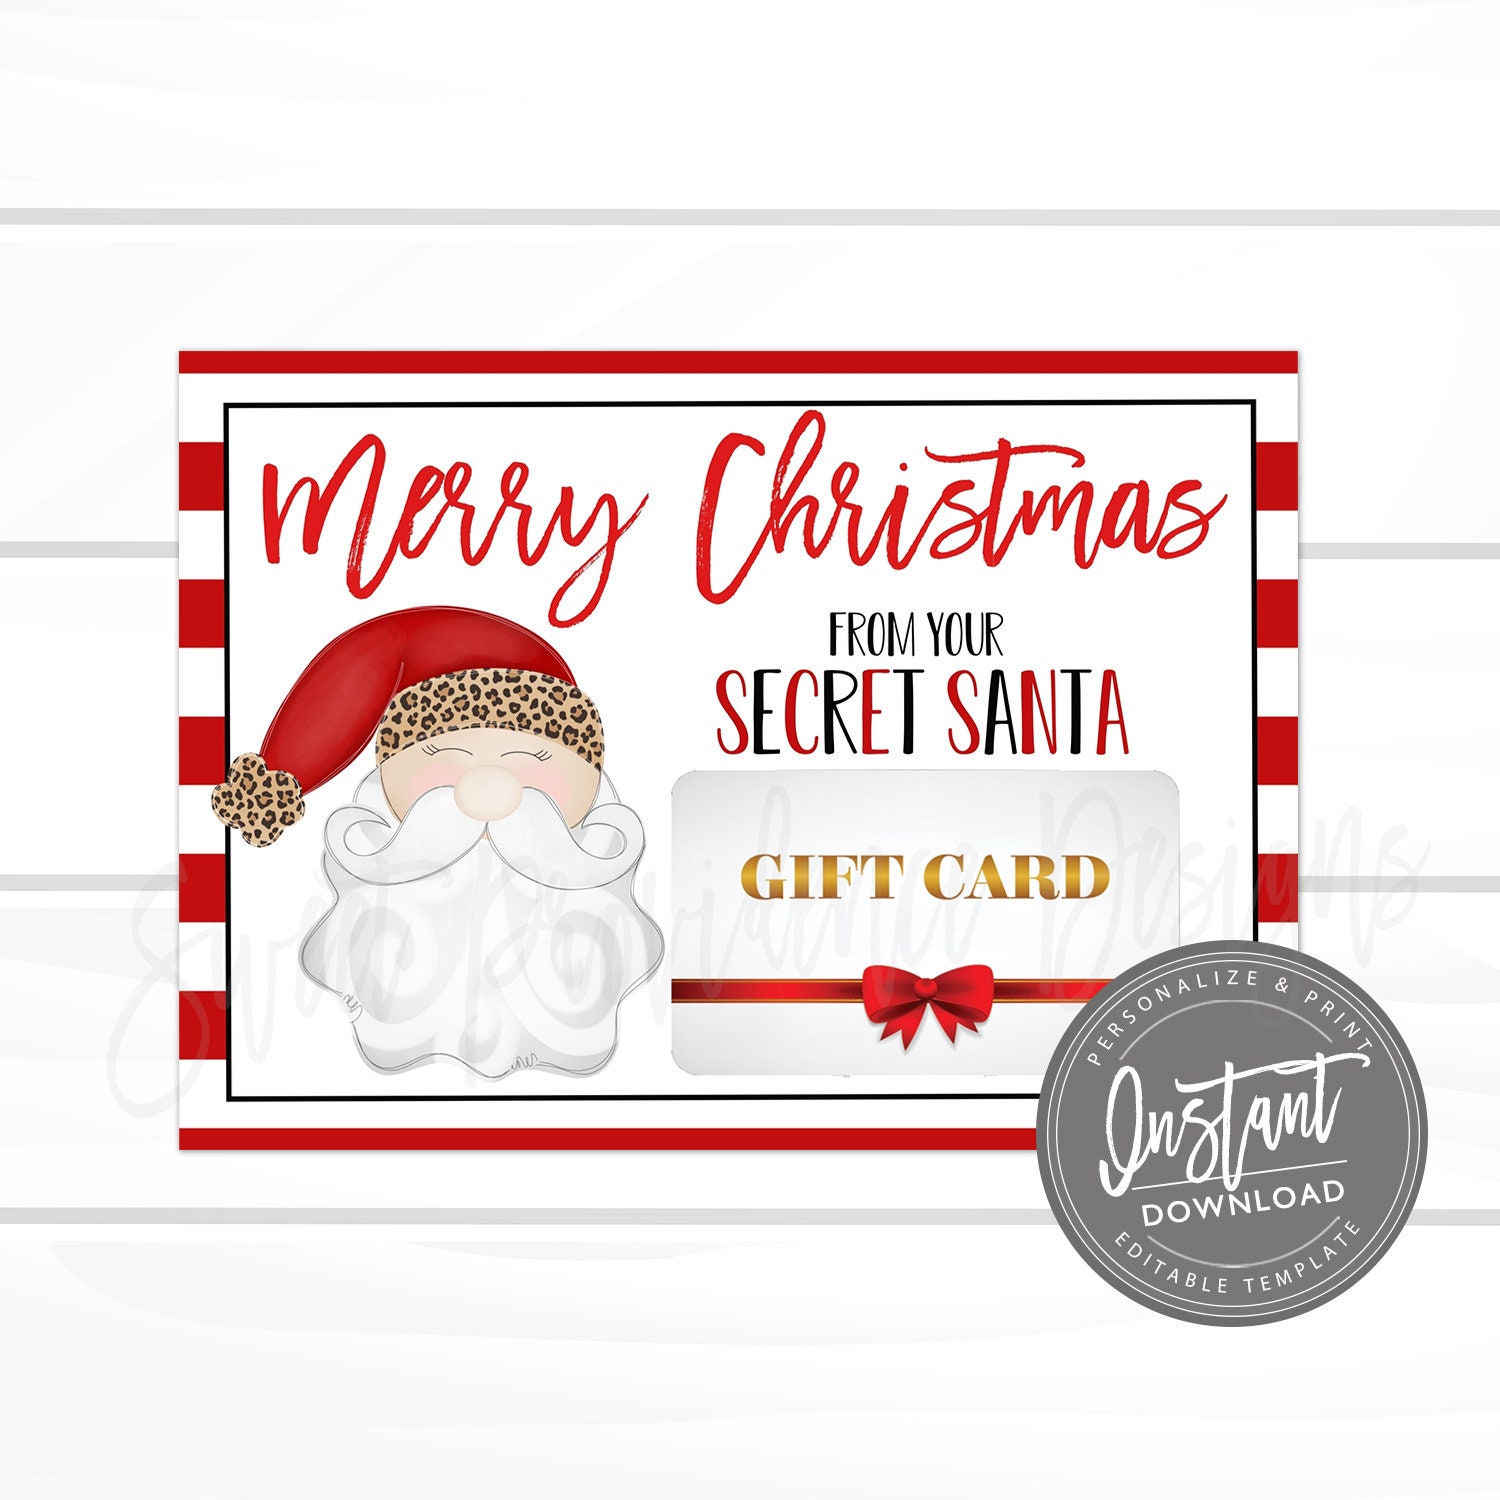 Sweet Secret Santa